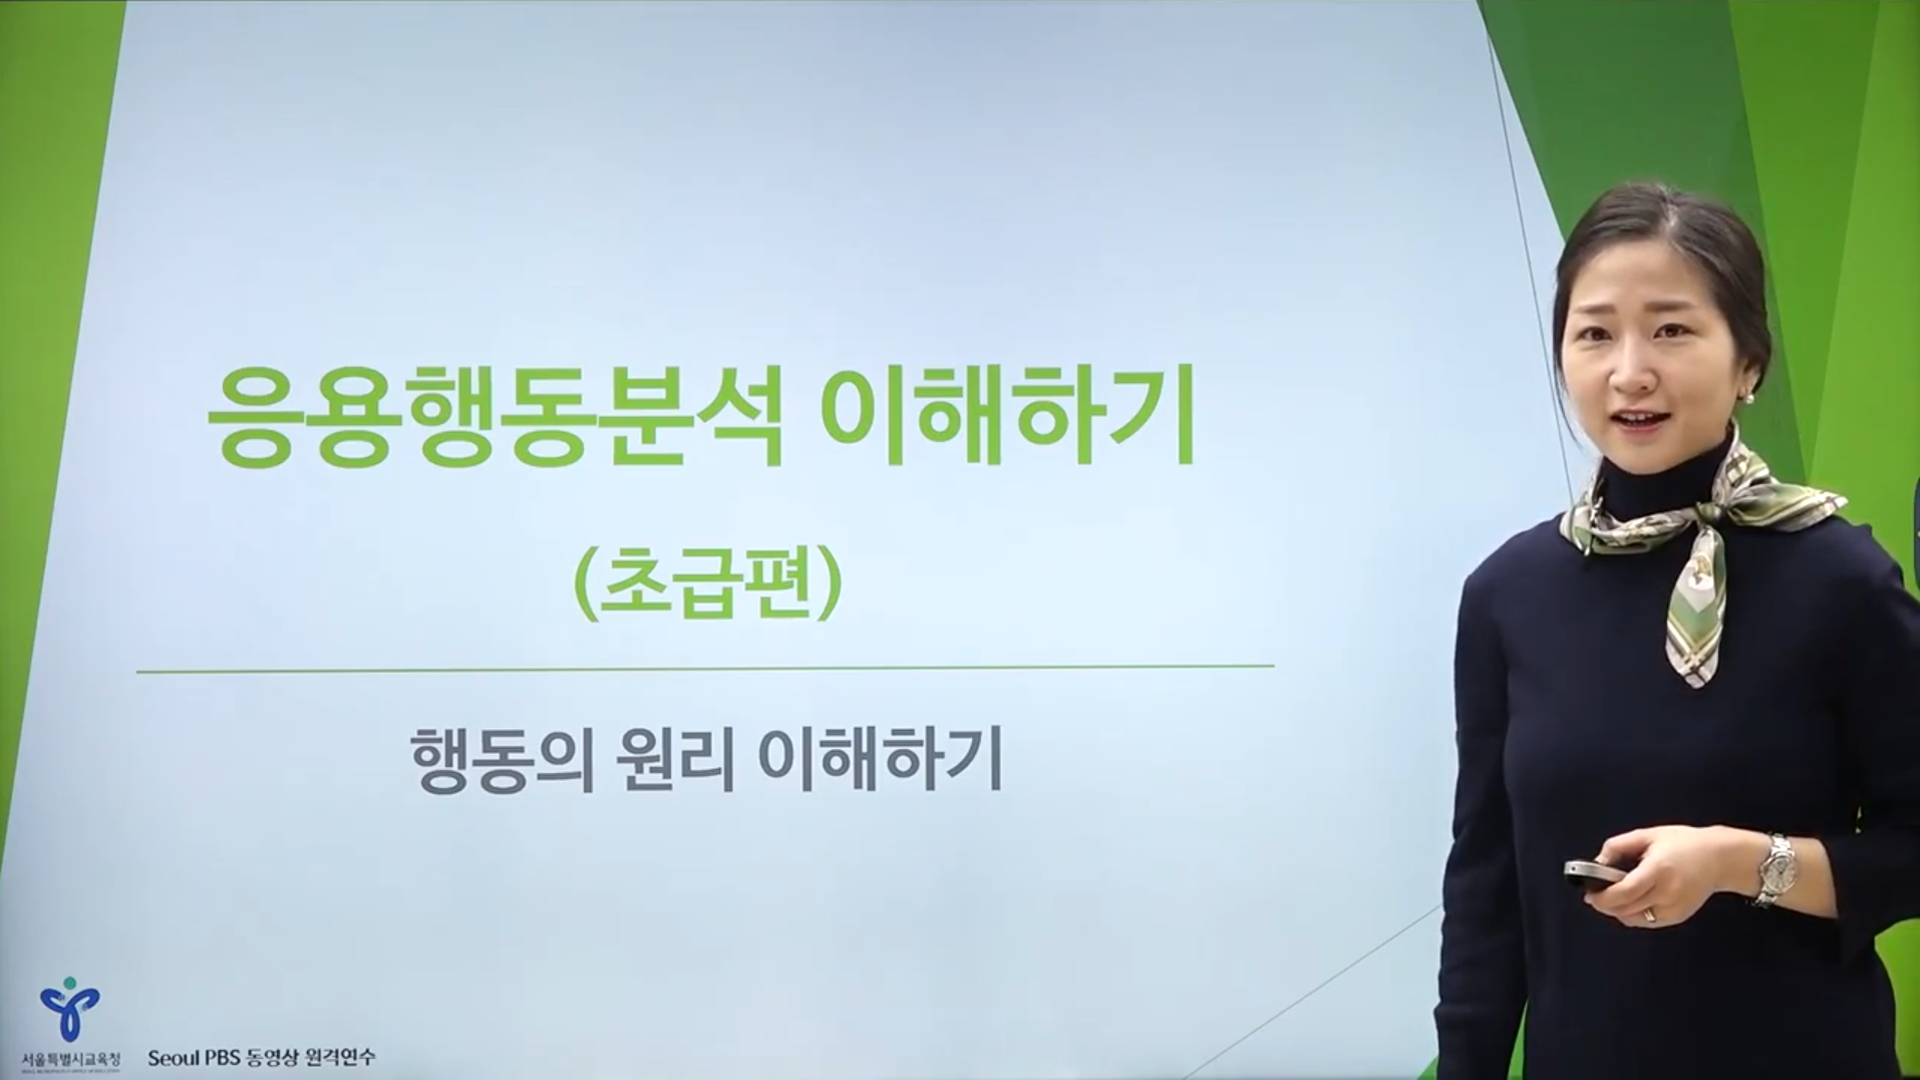 [Seoul PBS] [행동분석] 01 행동의 원리와 기능 이해하기